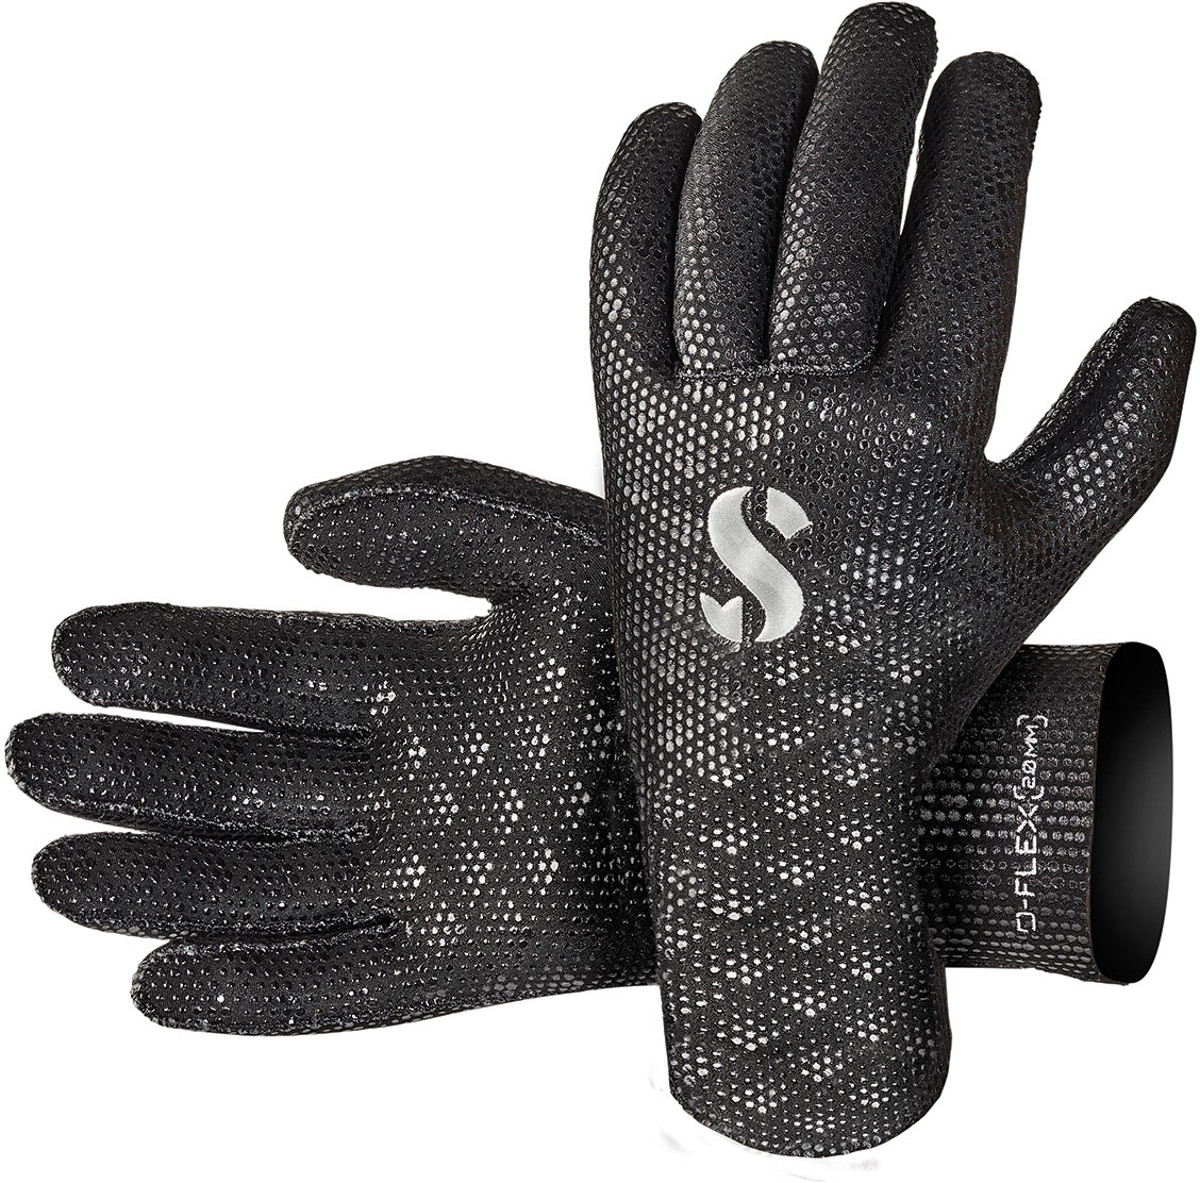 ScubaPro D-Flex 2mm Glove